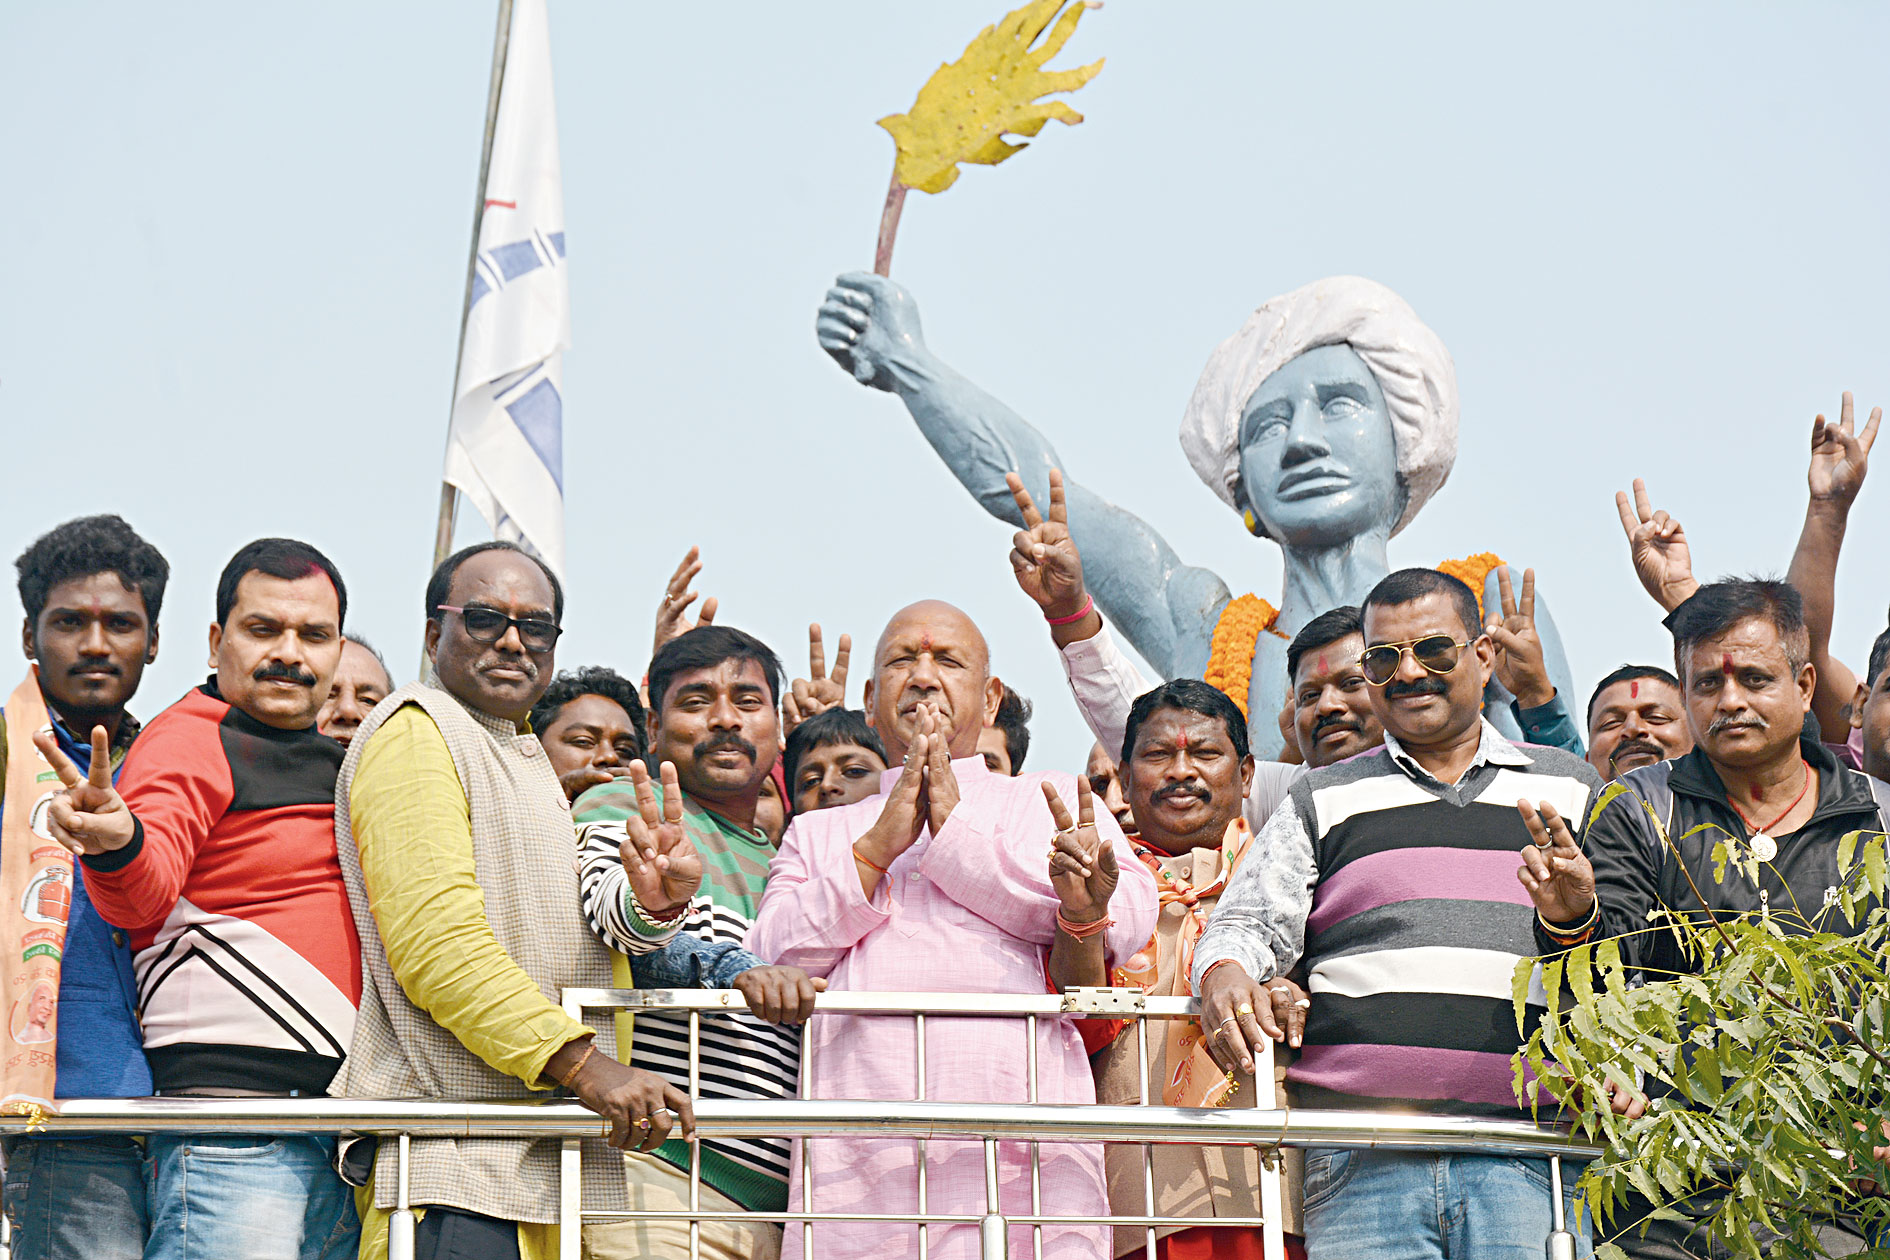 Saryu Roy, with his supporters, visits the Birsa Munda memorial at Birsanagar in Jamshedpur on Tuesday. 

